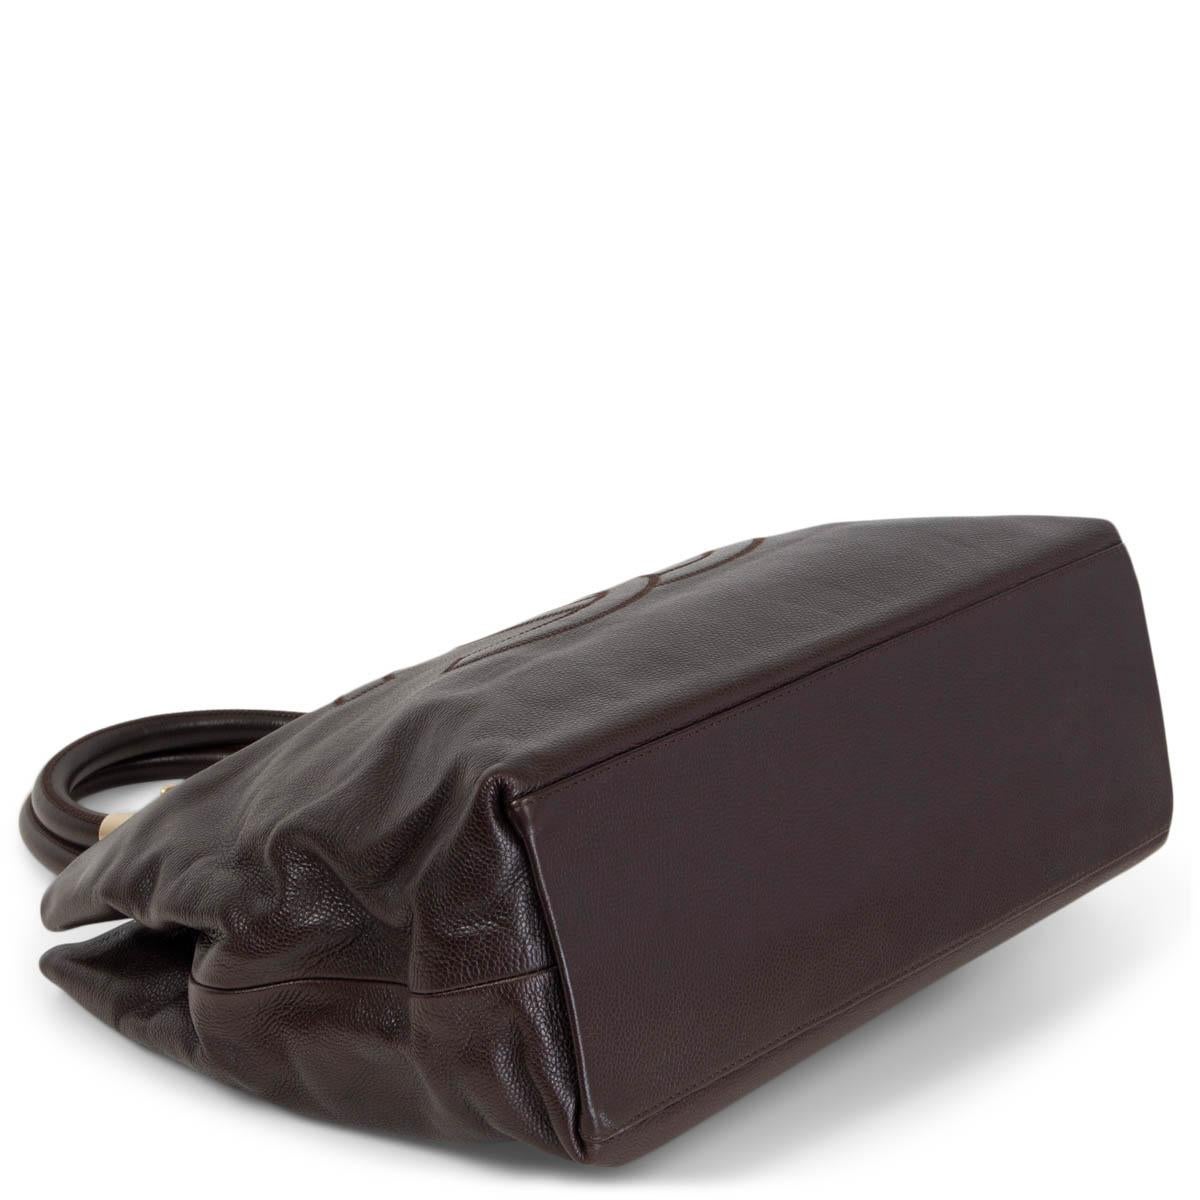 CHANEL dark brown Caviar leather CC TOTE Bag Vintage 1